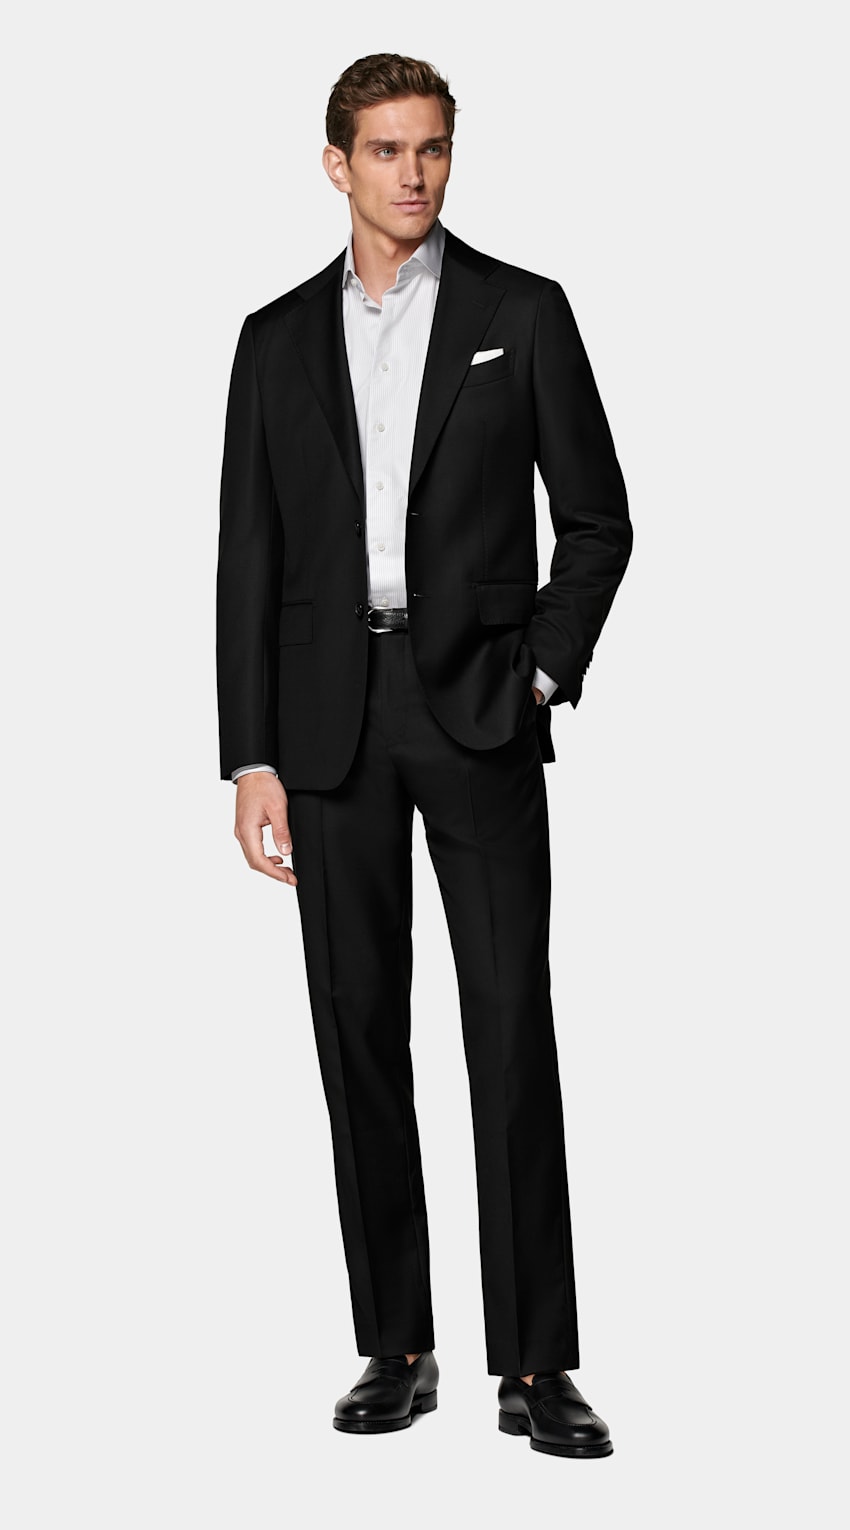 SUITSUPPLY All Season Pura lana S110s de Vitale Barberis Canonico, Italia Blazer de traje Havana negro corte Tailored